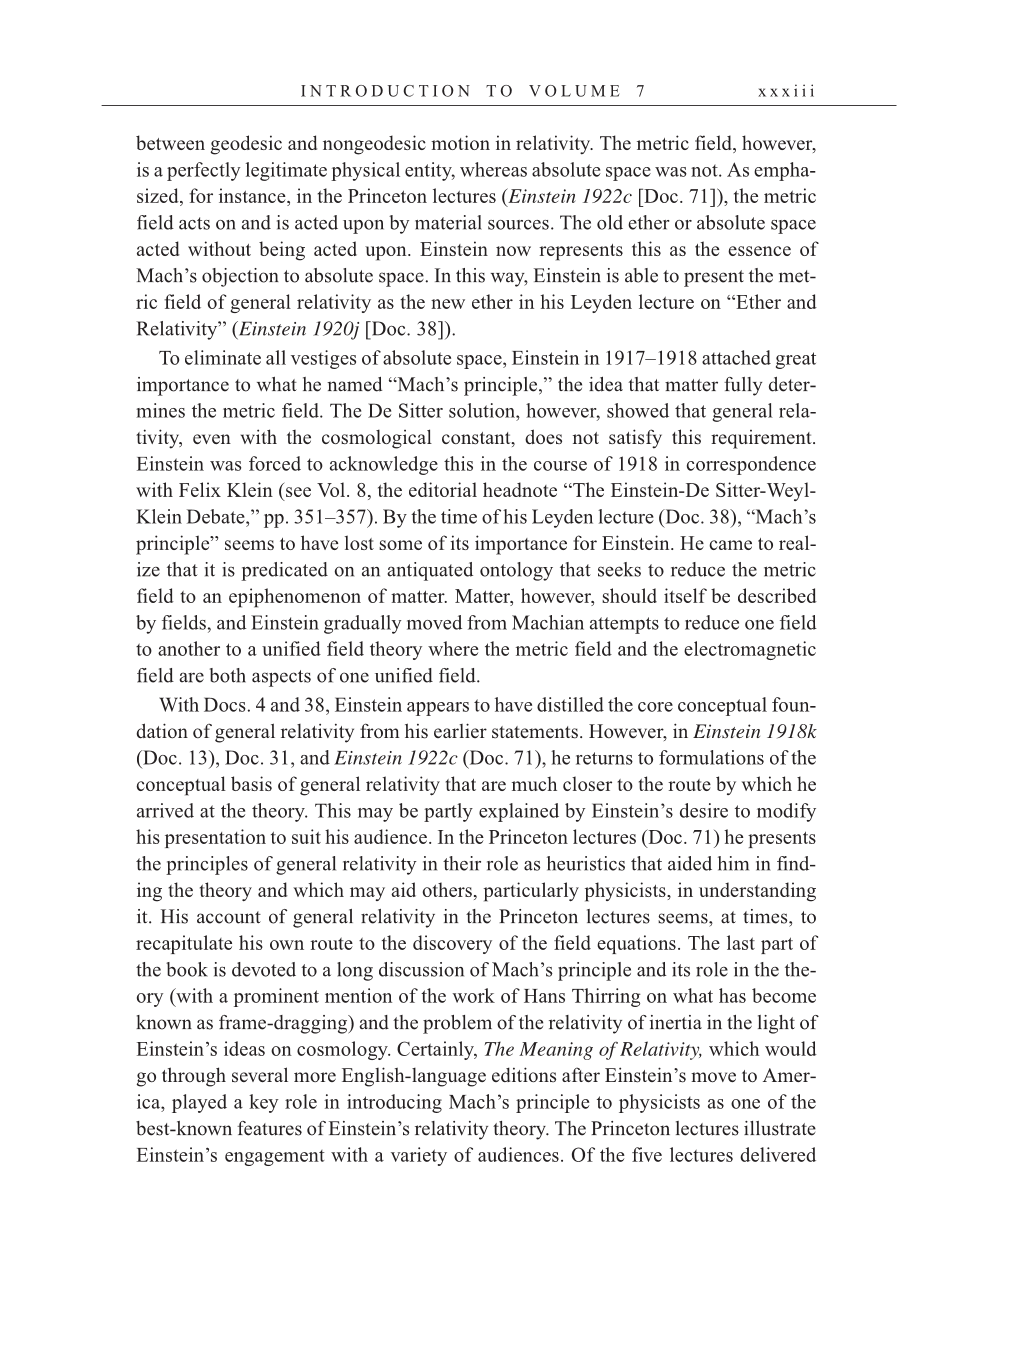 Volume 7: The Berlin Years: Writings, 1918-1921 page xxxiii